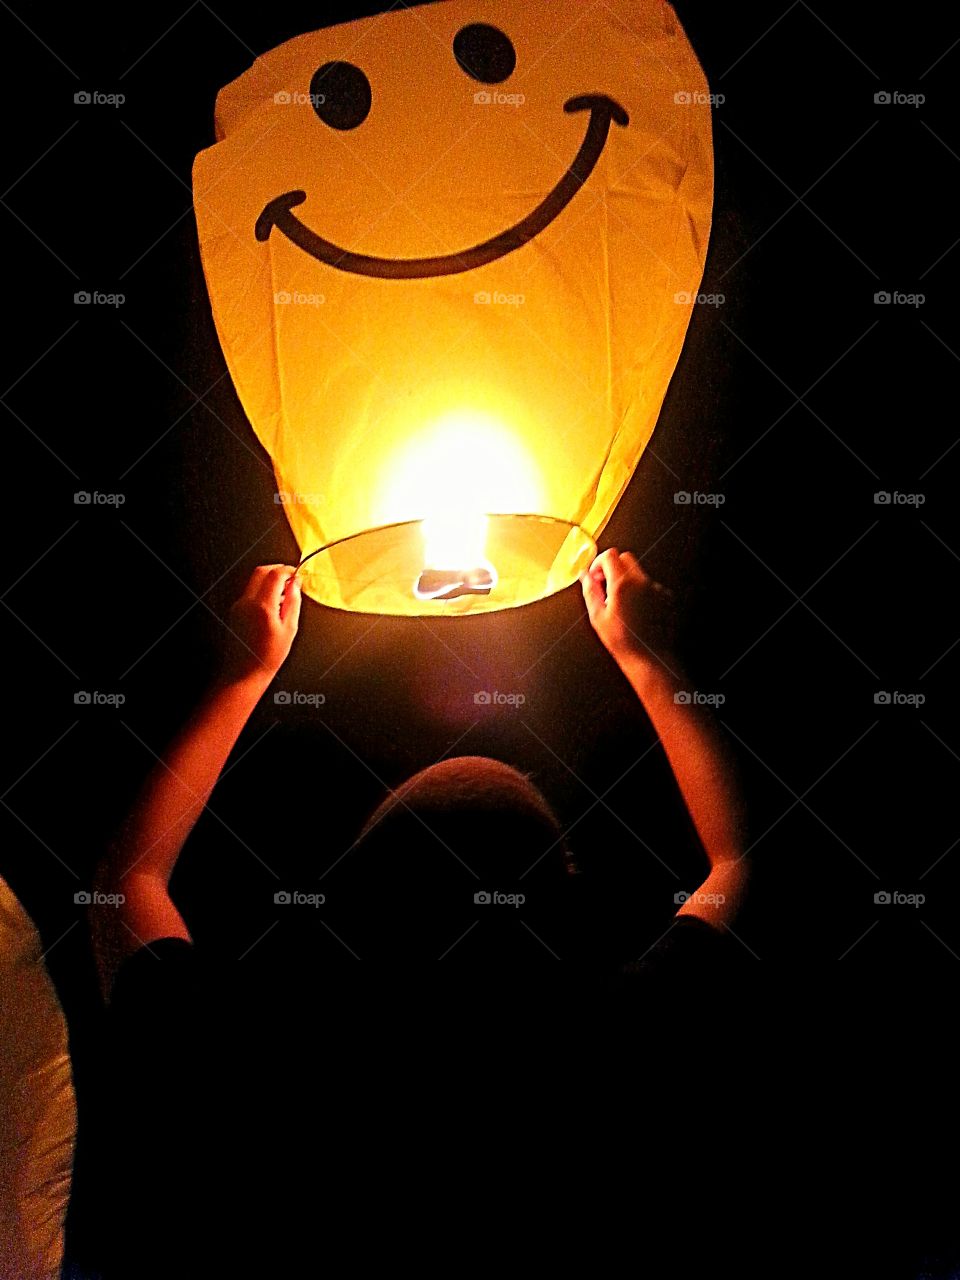 A boy let's go of a lantern.